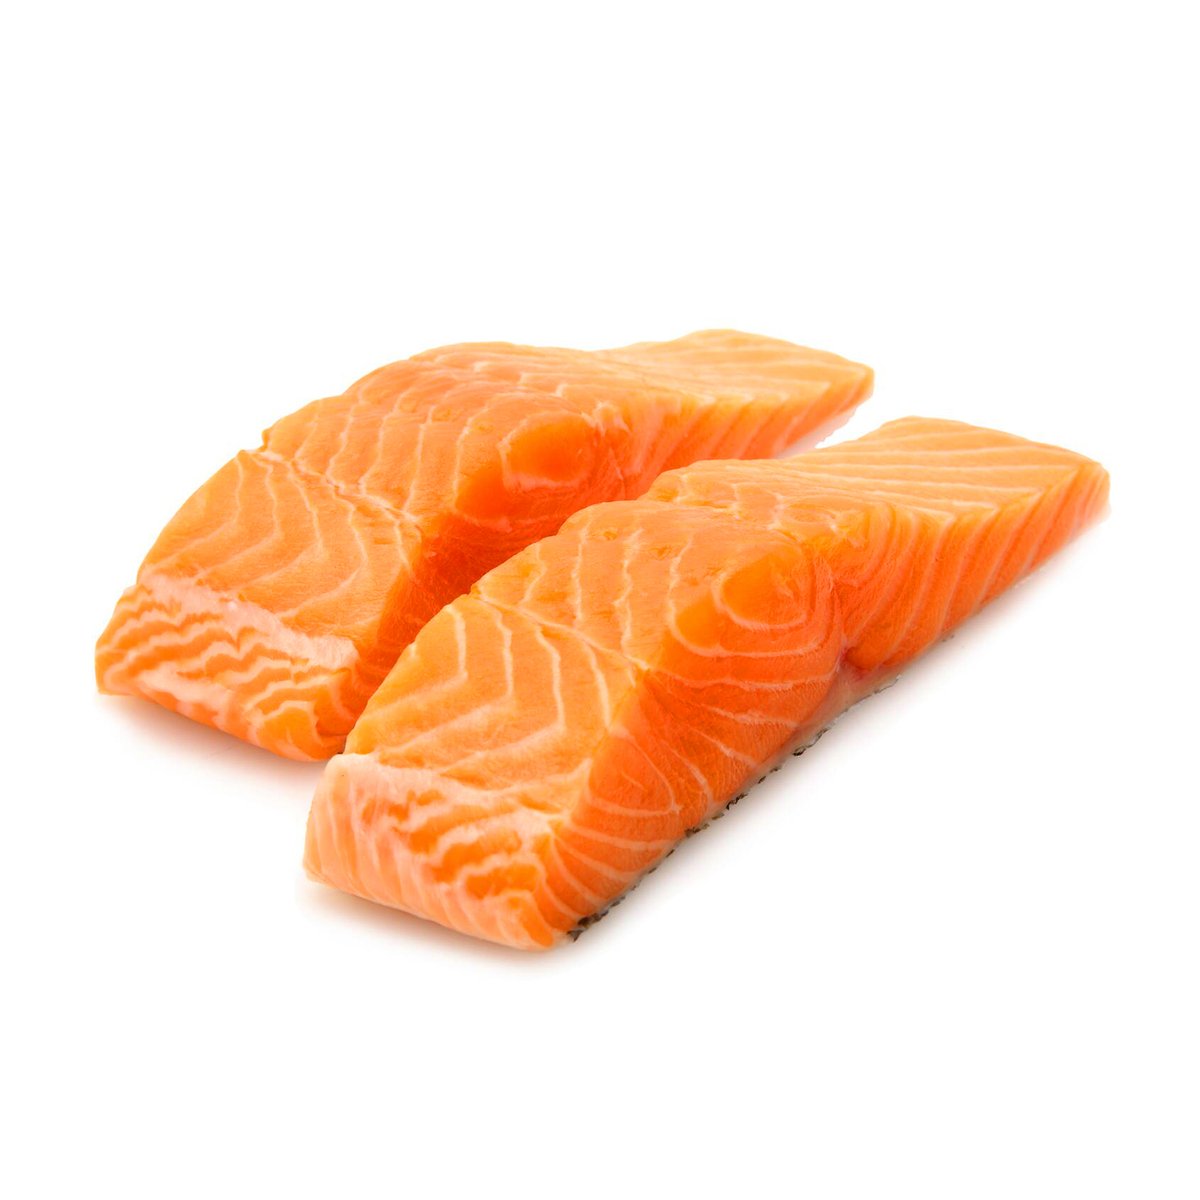 Norwegian Salmon Fillet 350g Approx Weight